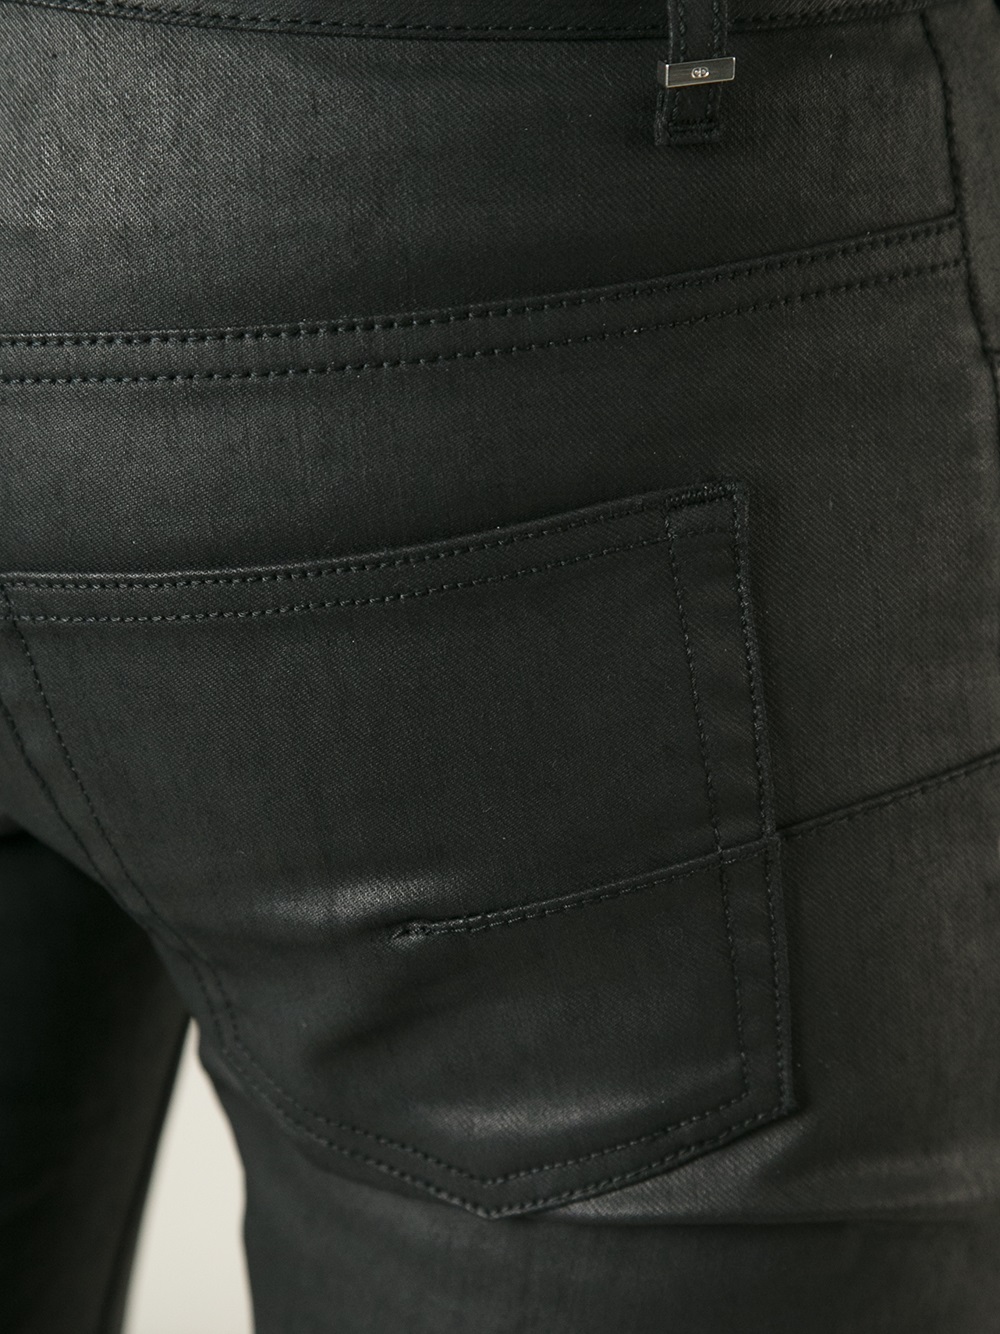 Lyst - Dior Homme Coated Skinny Jeans in Black for Men